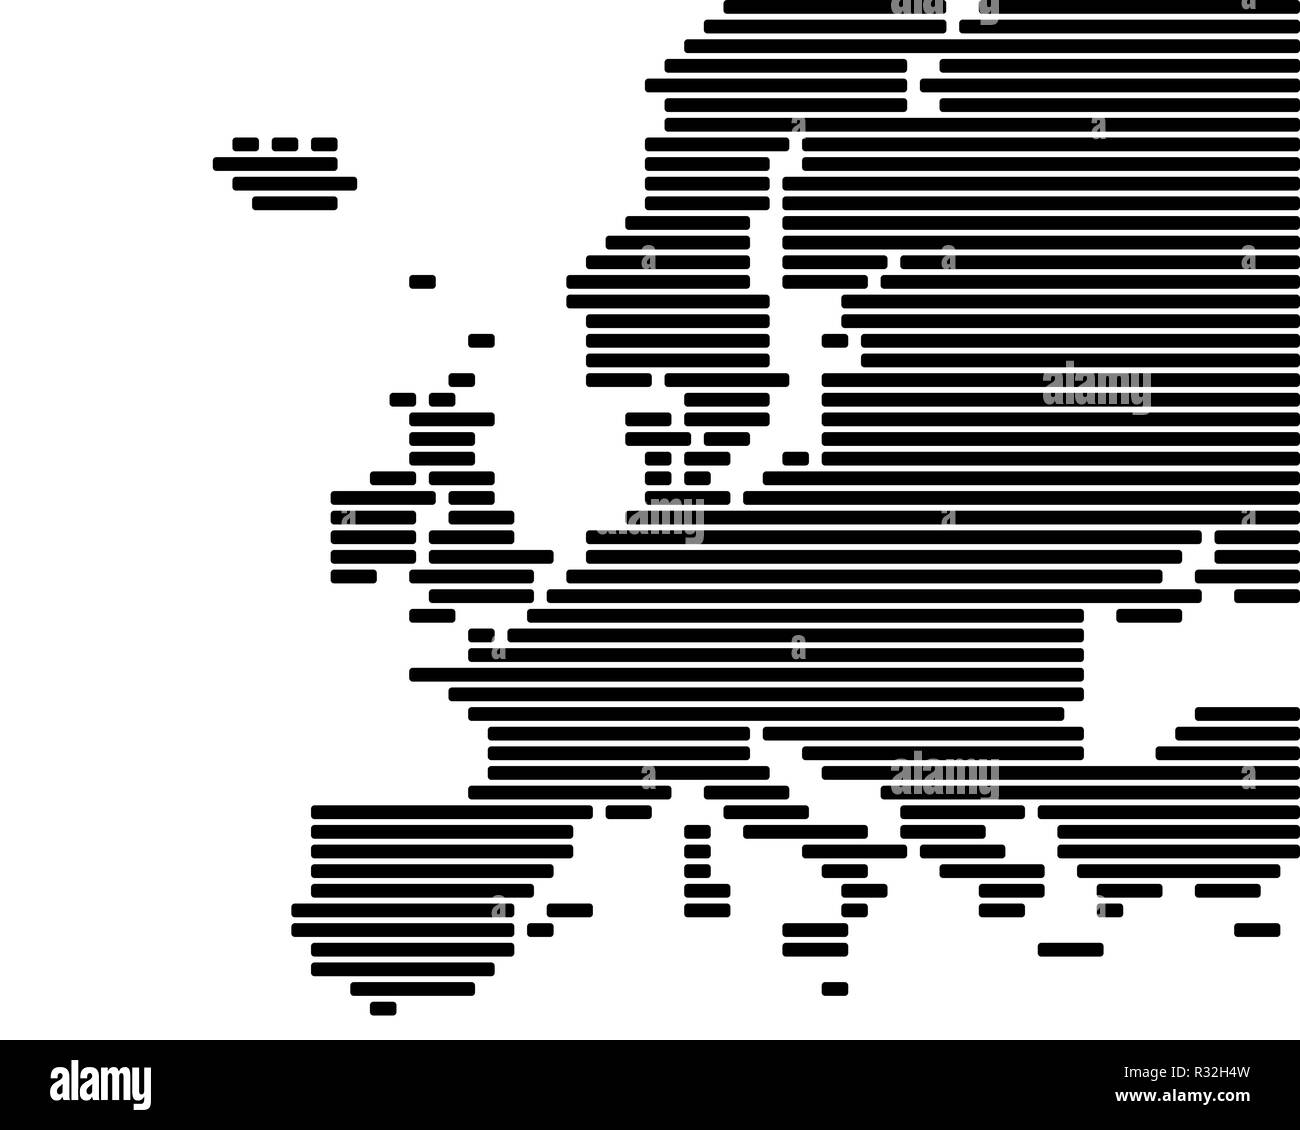 map-of-europe-stock-photo-alamy